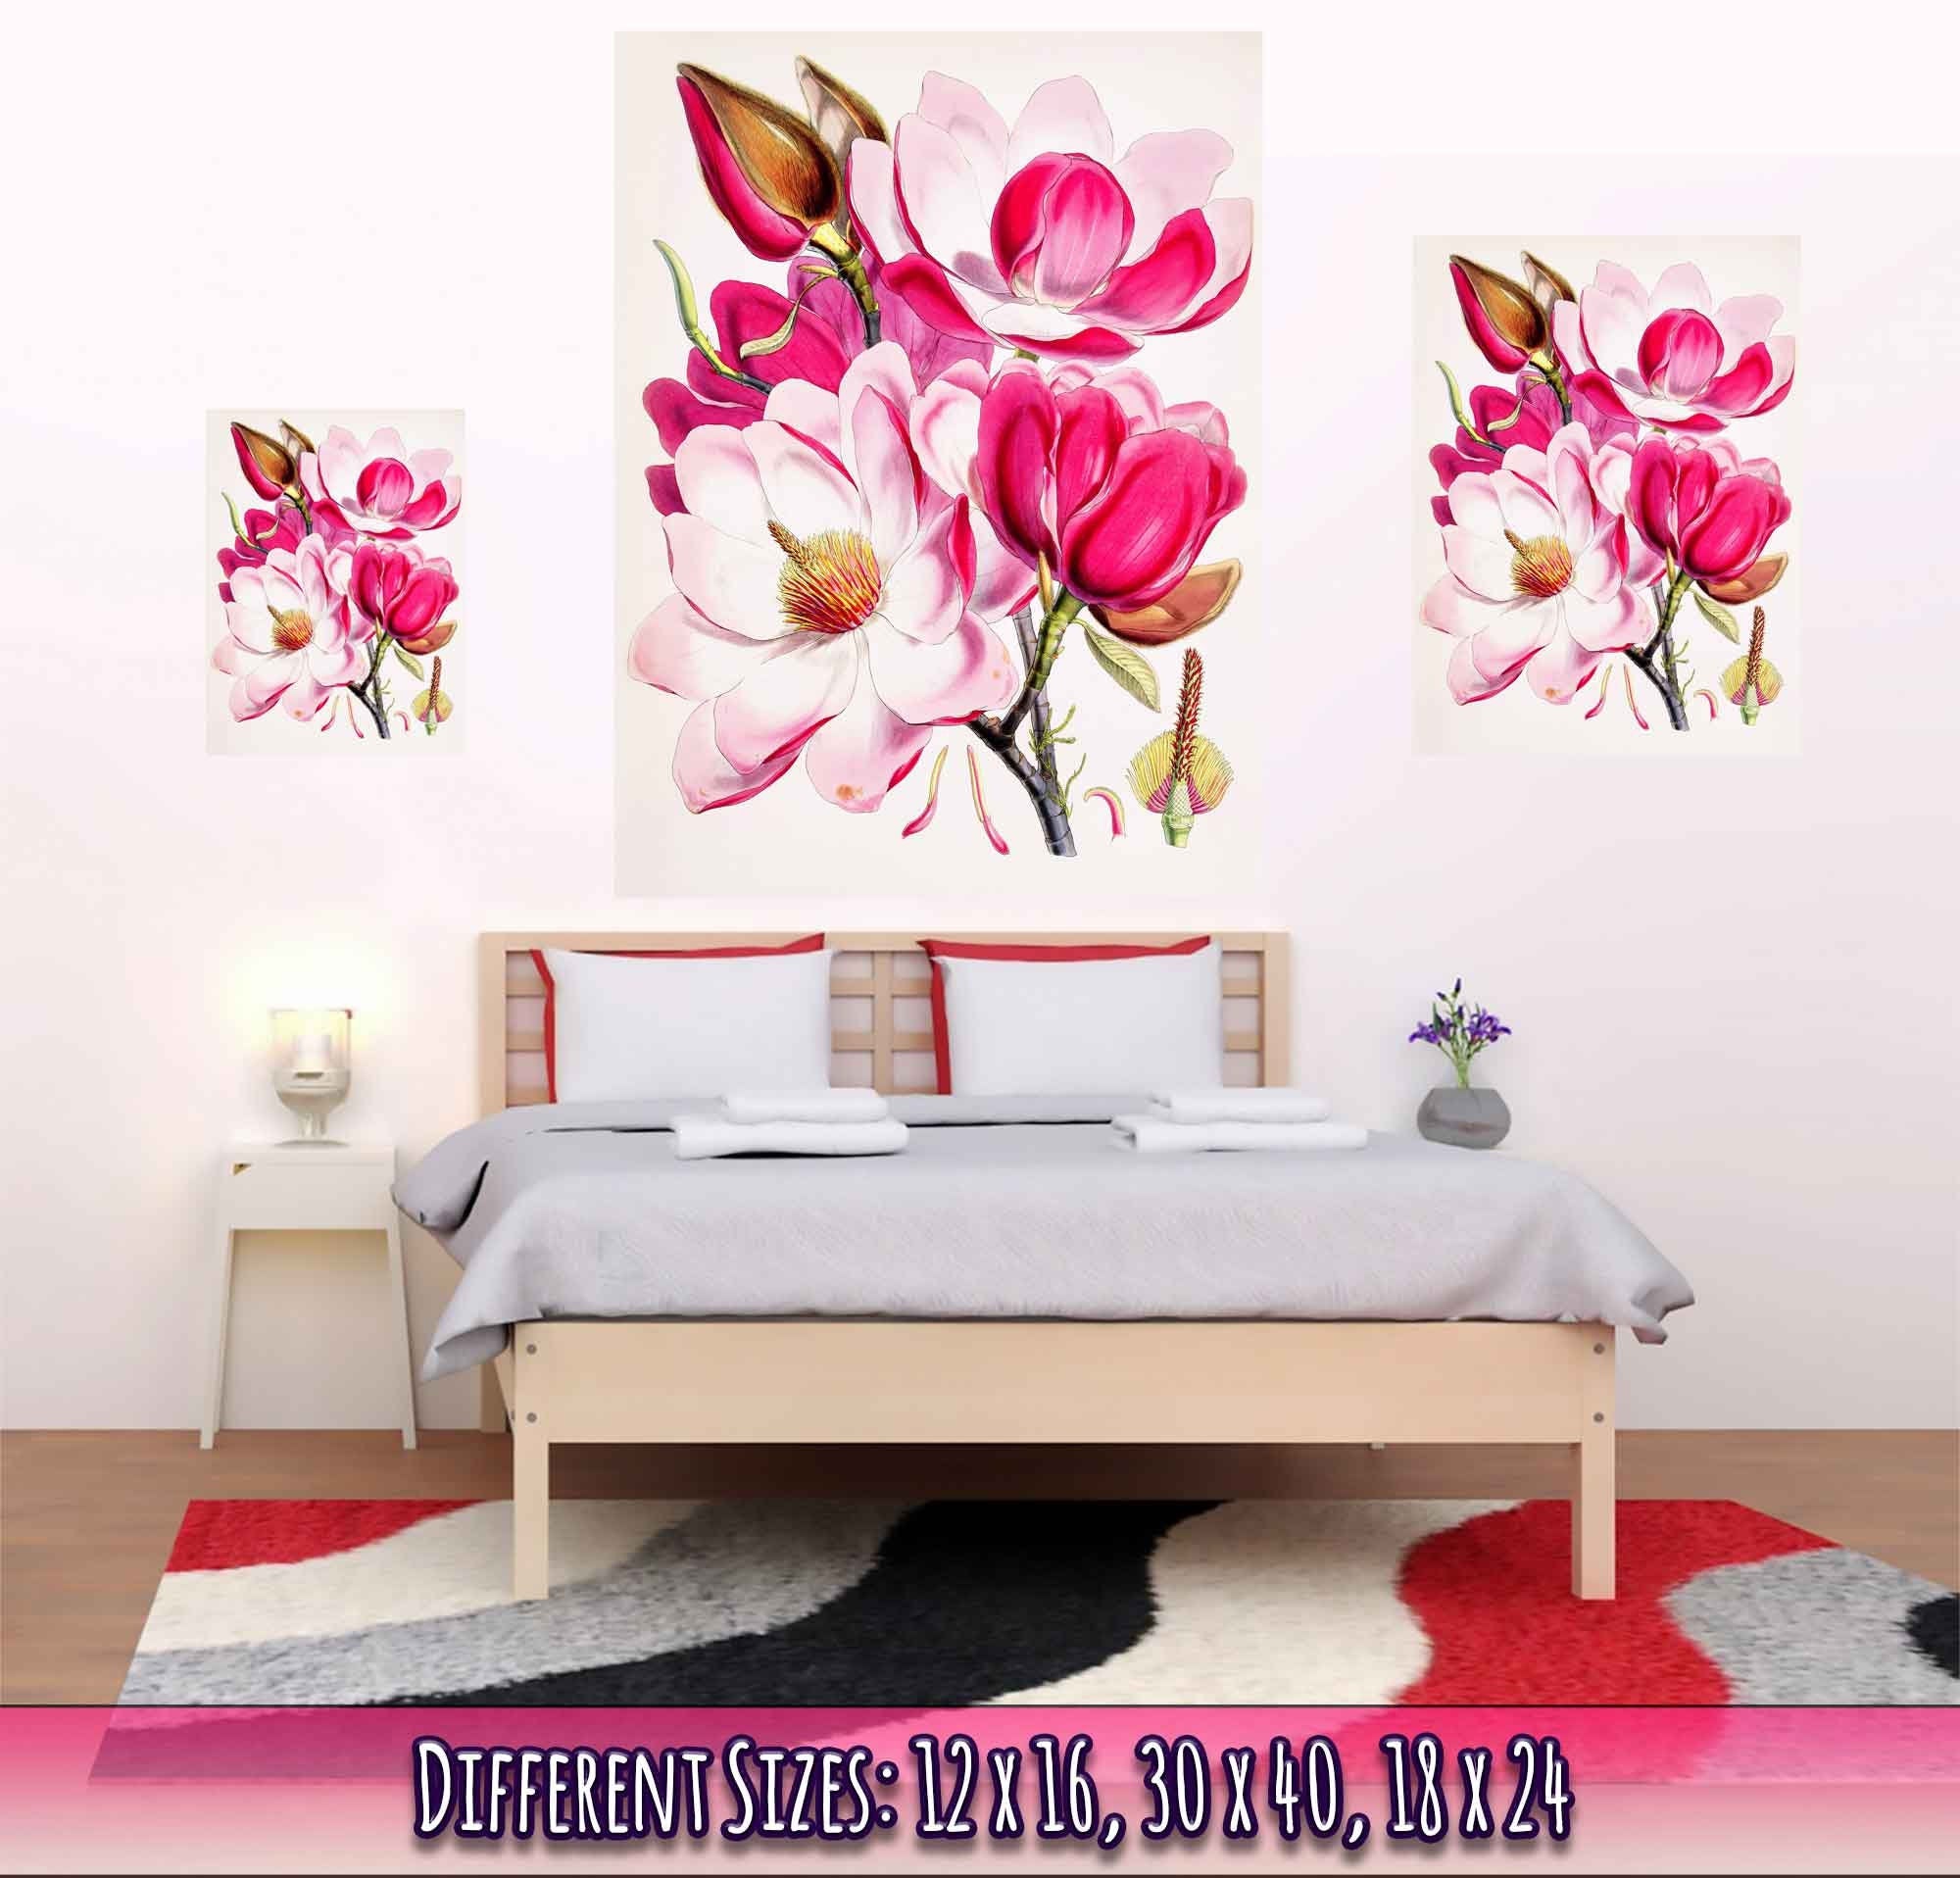 Vintage Campbells Magnolia Poster - Pink Magnolia Flower Print - Flower Wall Art - Wh Fitch 1817 - 1892 - WallArtPrints4U